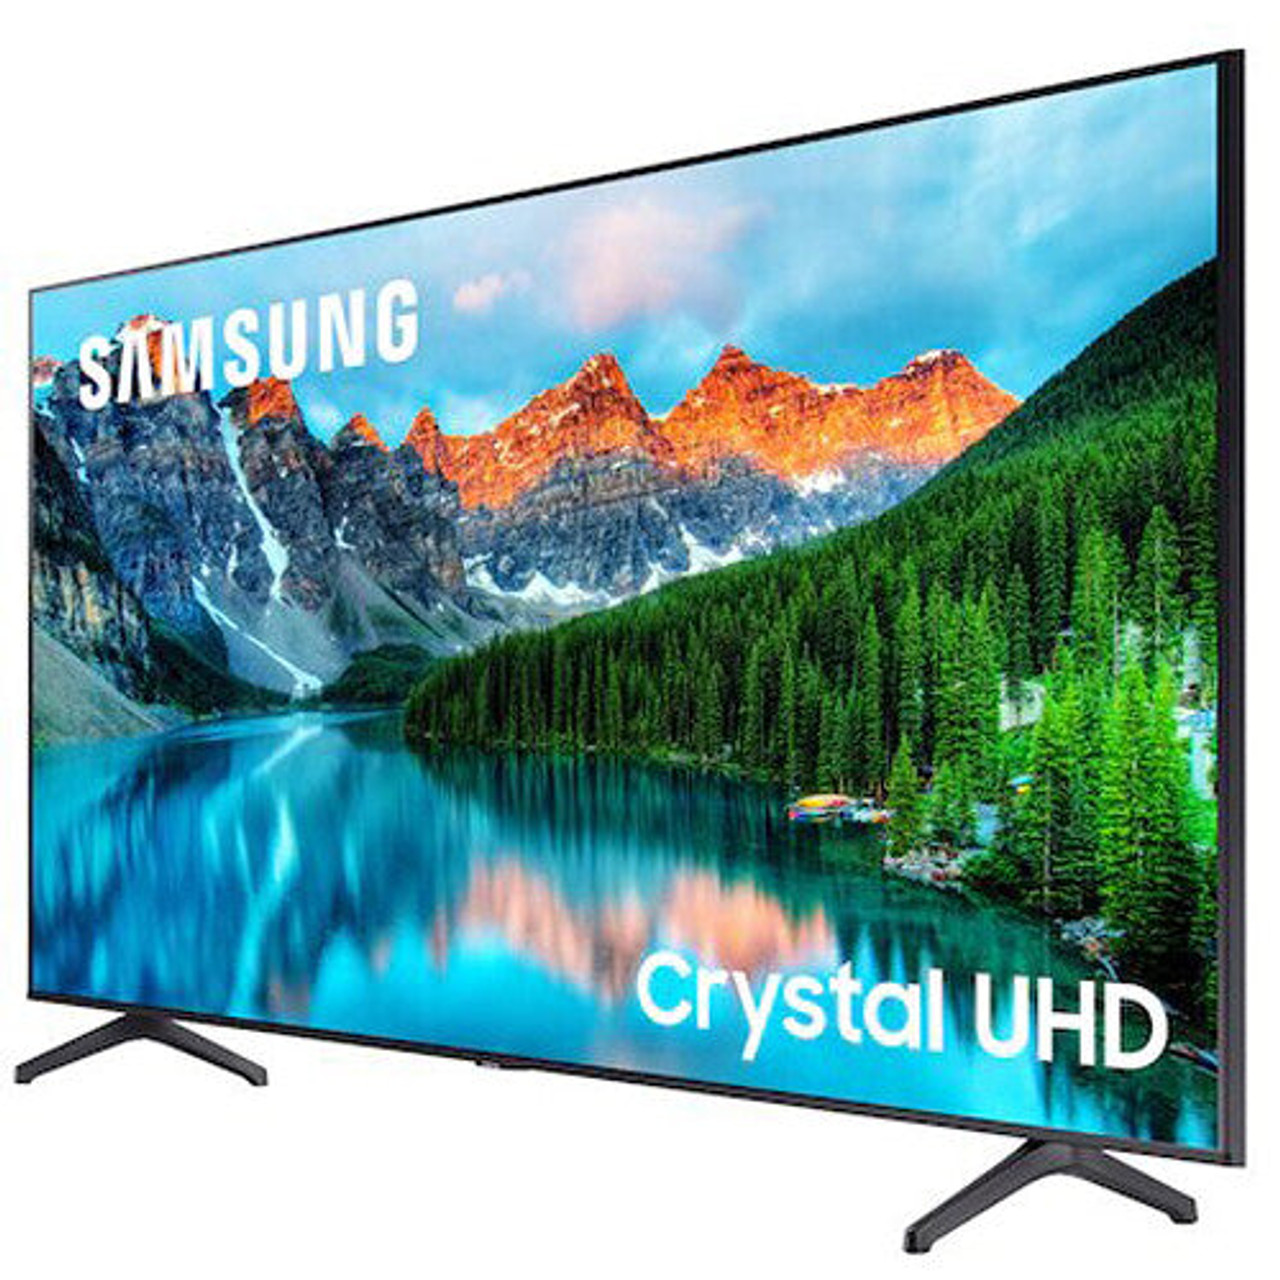 Samsung LH43BETHLGFXGO-RB 43" BET-H Series Crystal UHD 4K Pro TV - Certified Refurbished